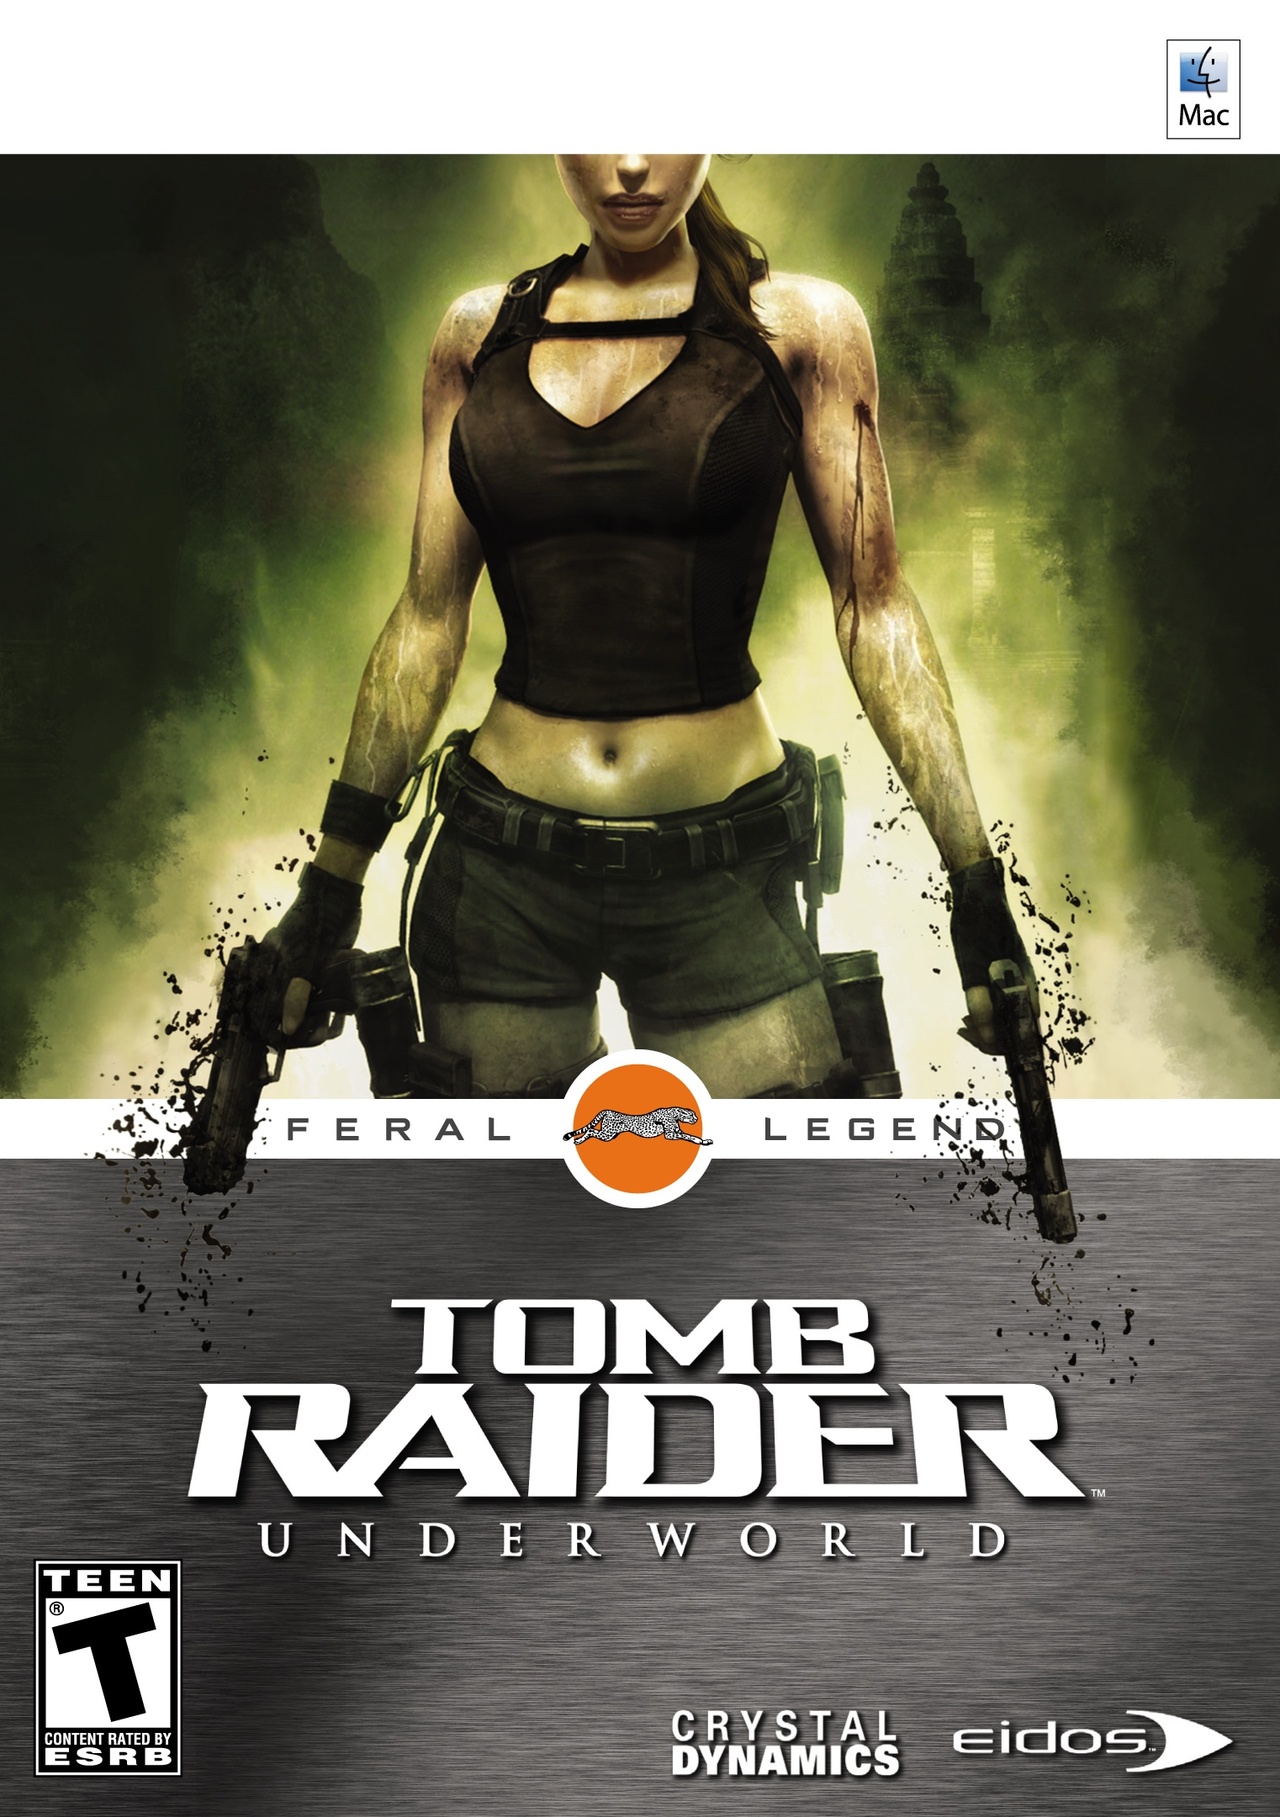 Download Tomb Raider For Mac Free